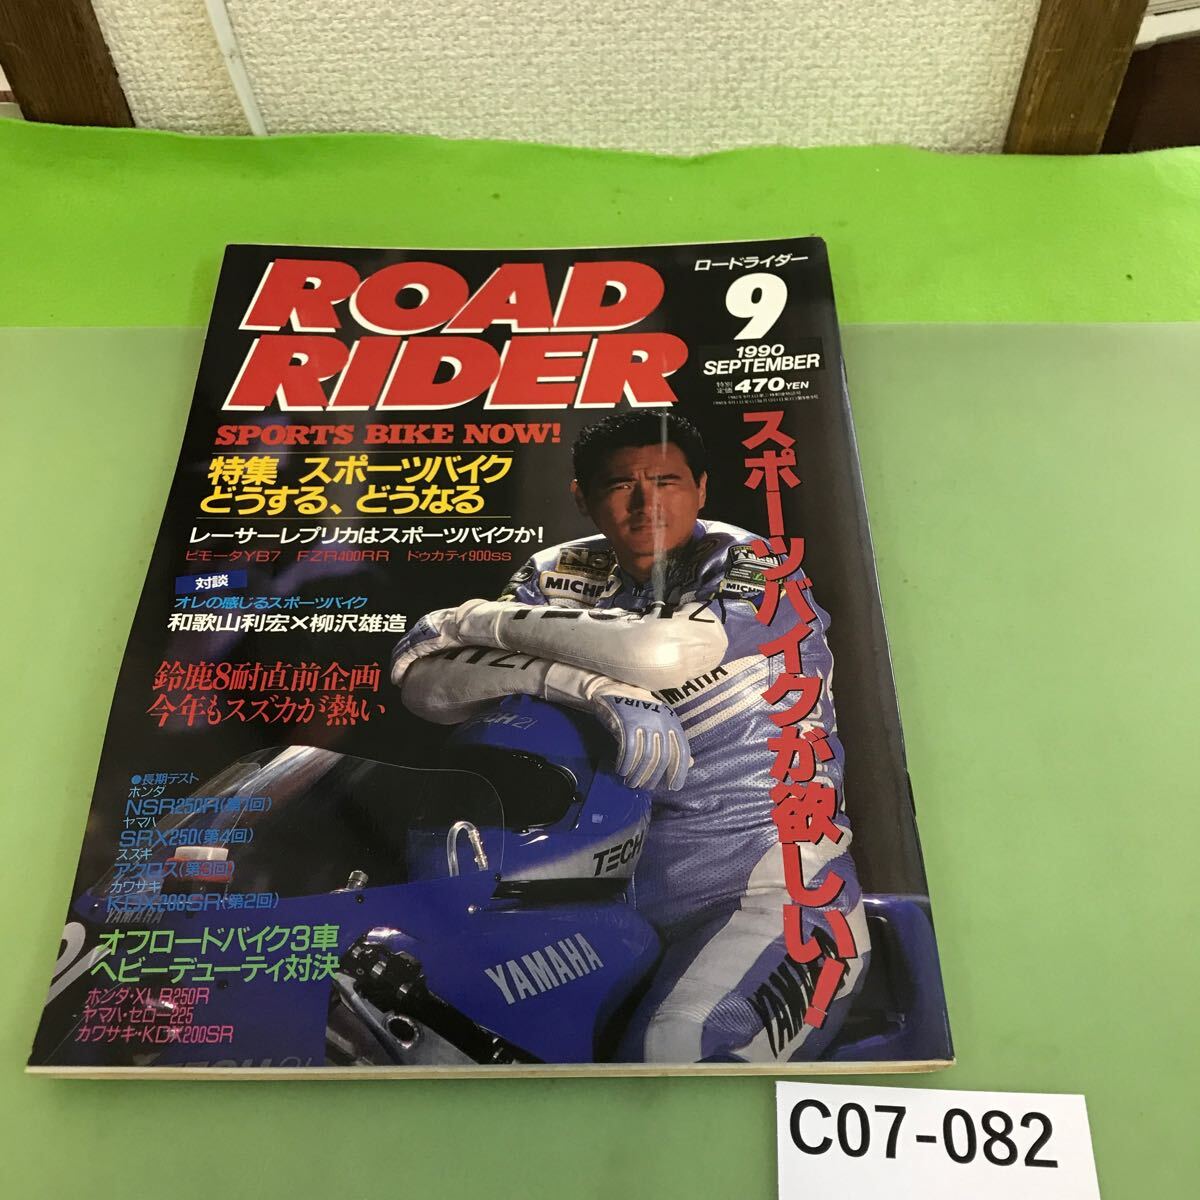 C07-082 Road Rider9 1990 Road Rider/Scratches